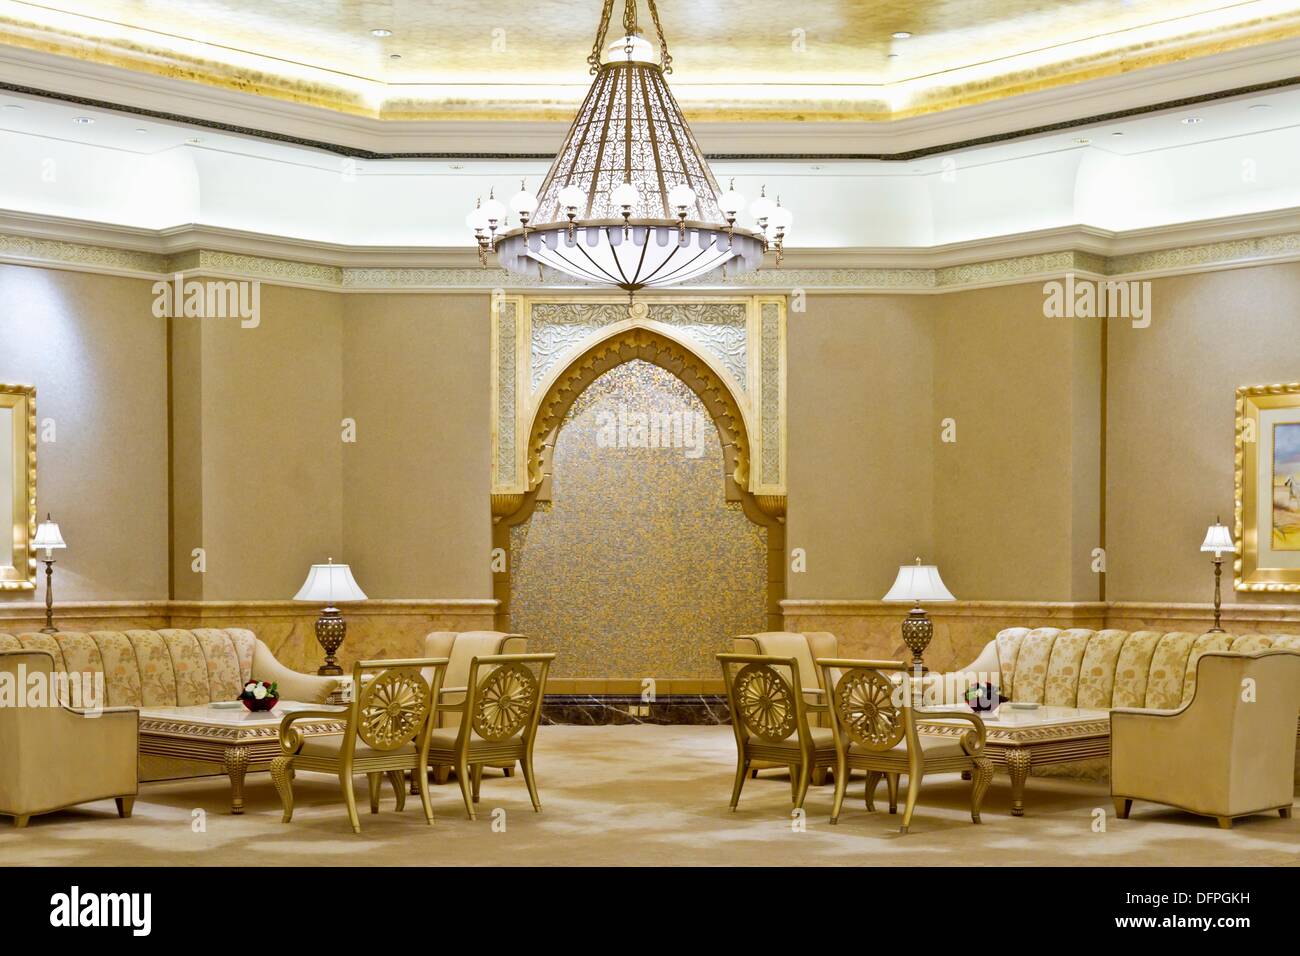 Interior Decor Of The Emirates Palace Hotel In Abu Dhabi